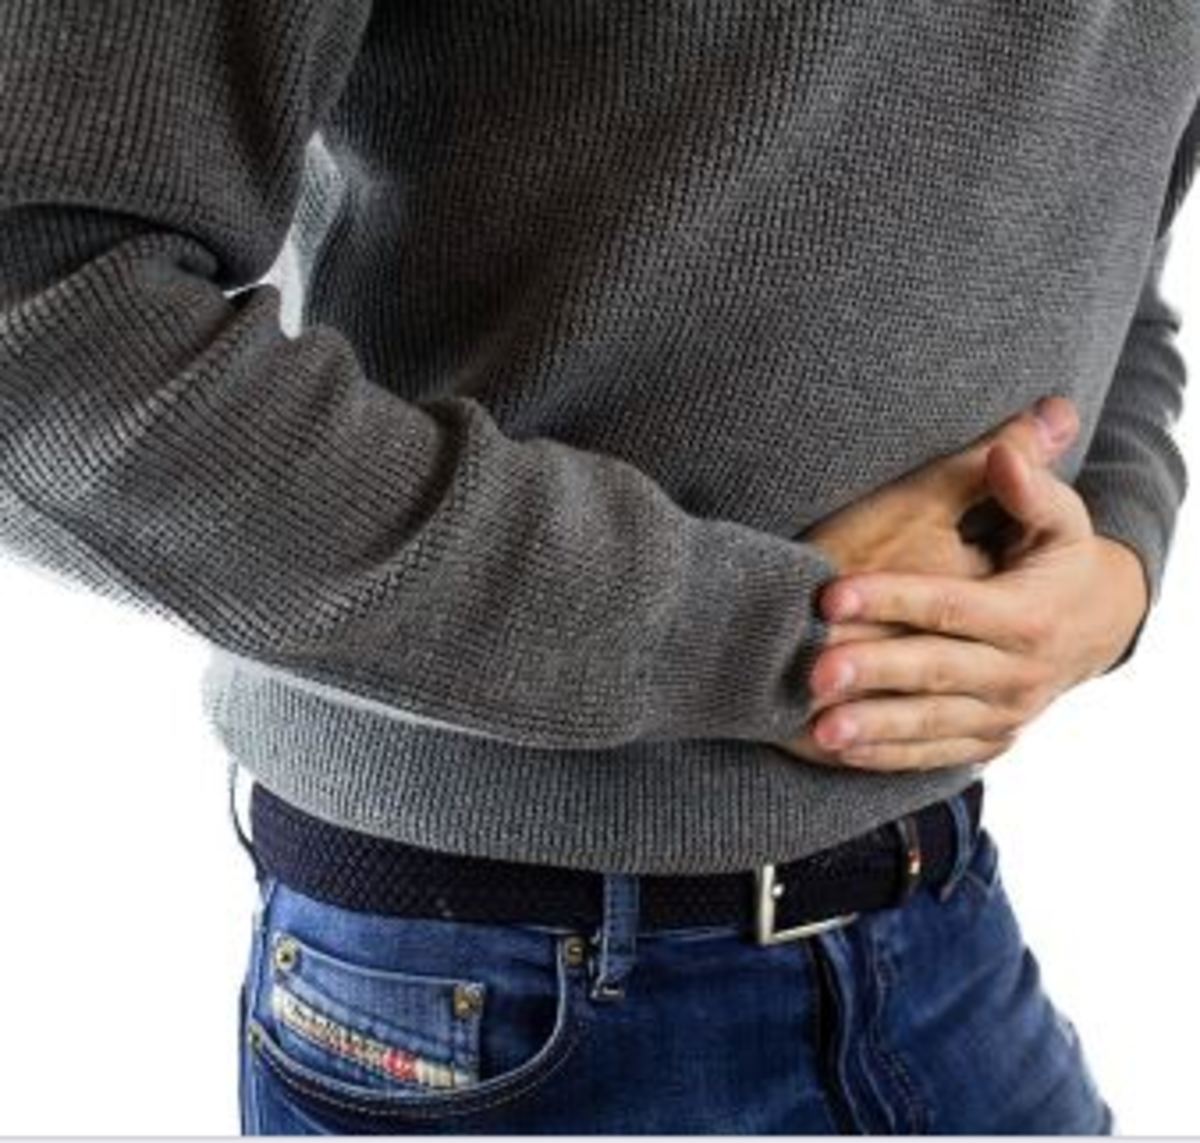  Humans with spleen cancer often report a sensation of pain or fullness in the left upper abdomen.